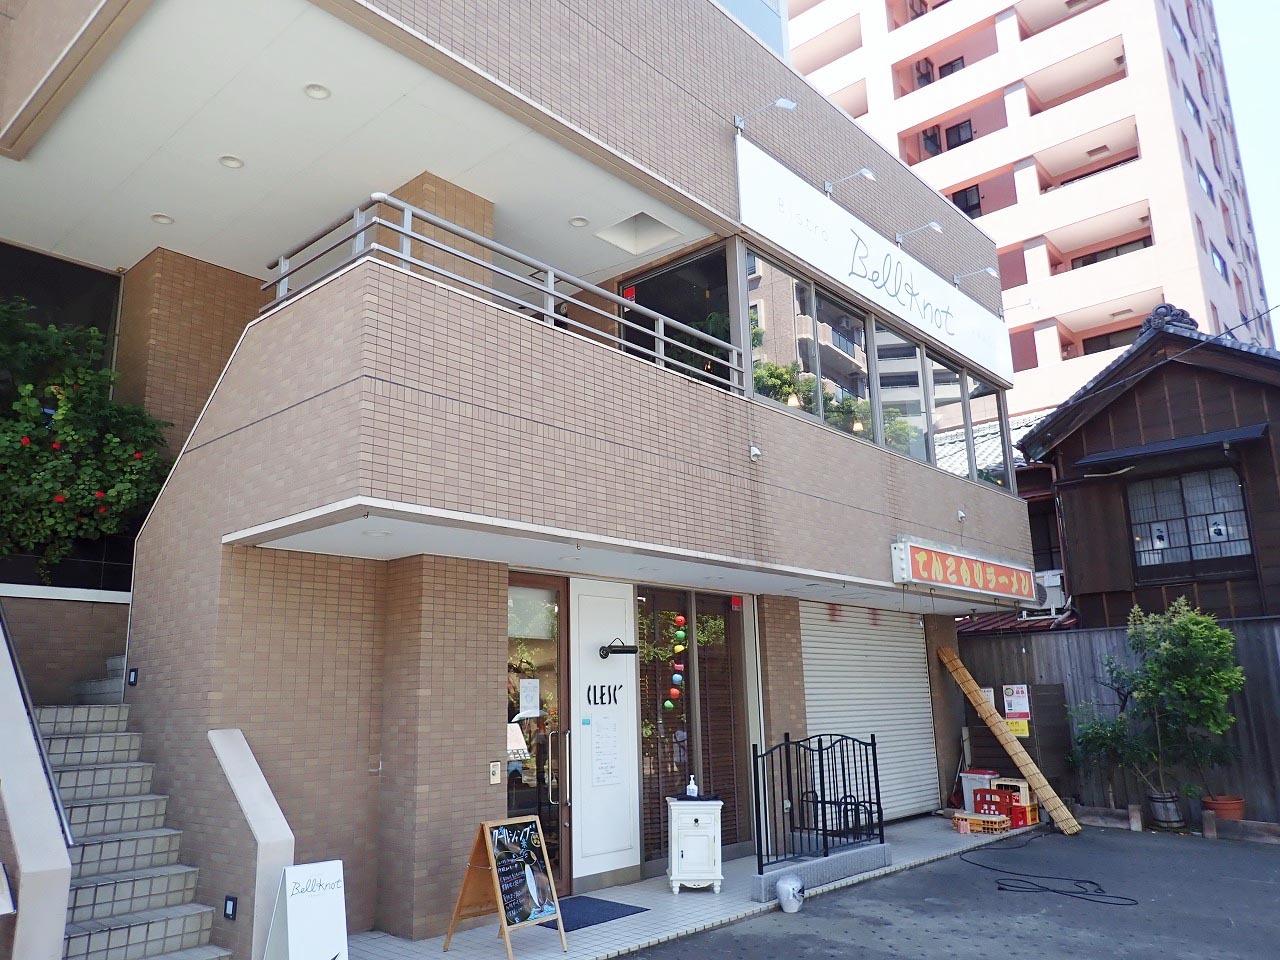 「Bistro Bellknot 川越」は川越市産業観光館「小江戸蔵里 KOEDO KURAR」の向かいの建物の2階で営業しています